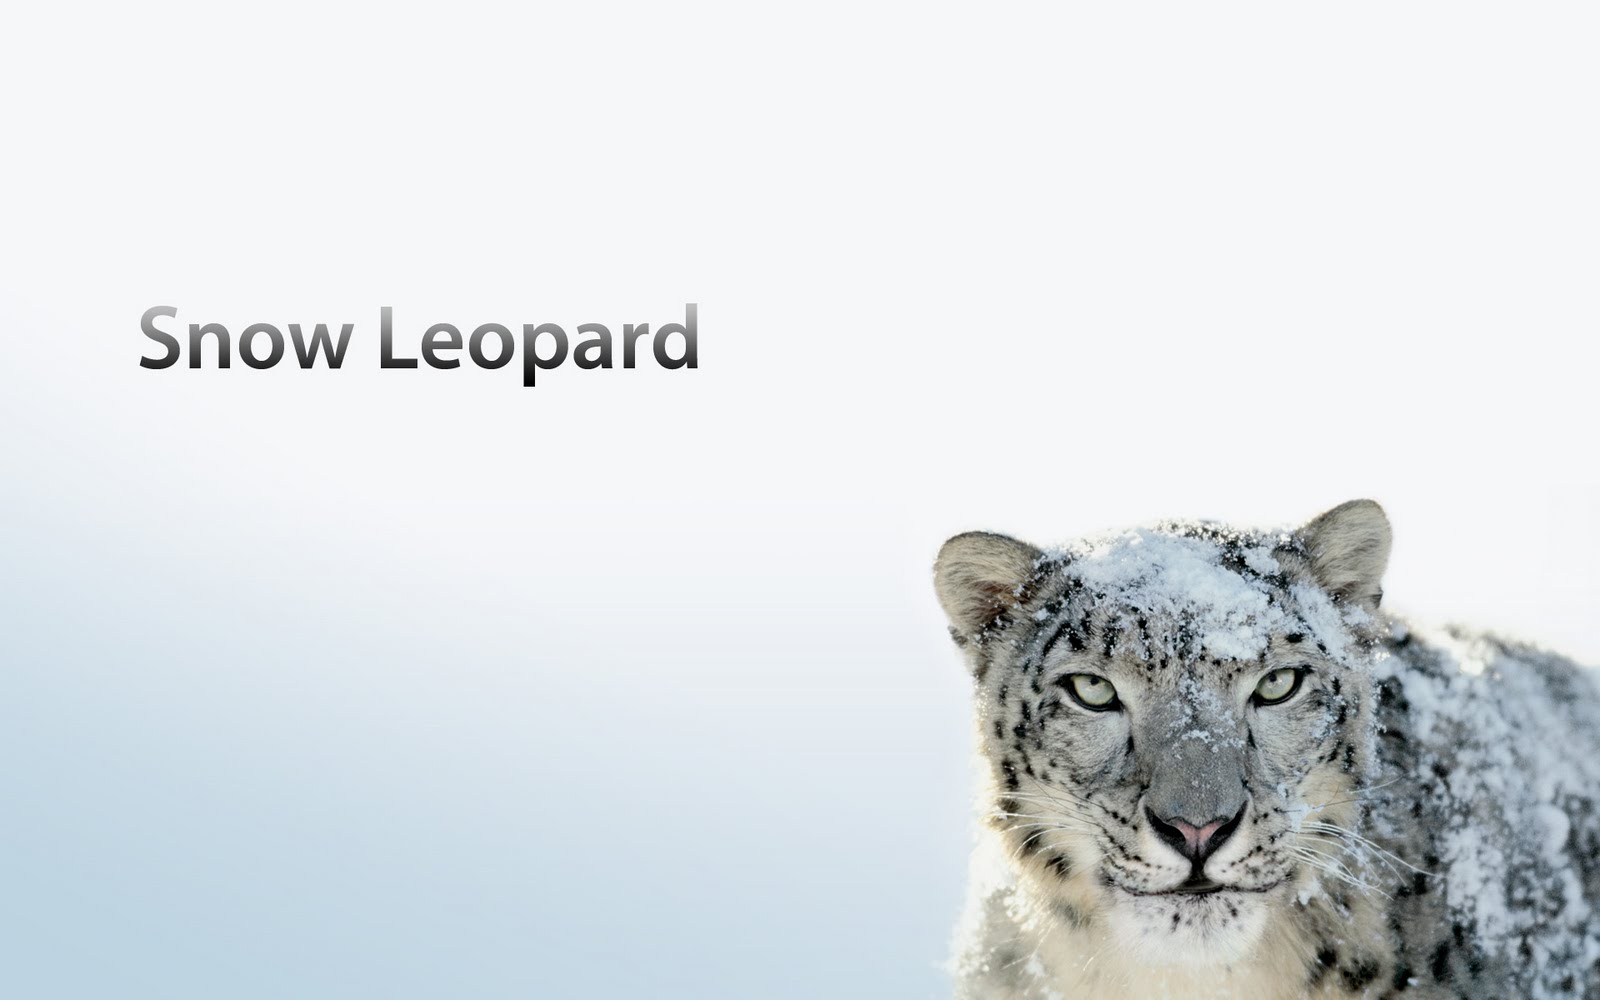 mac os x server 10.6 snow leopard